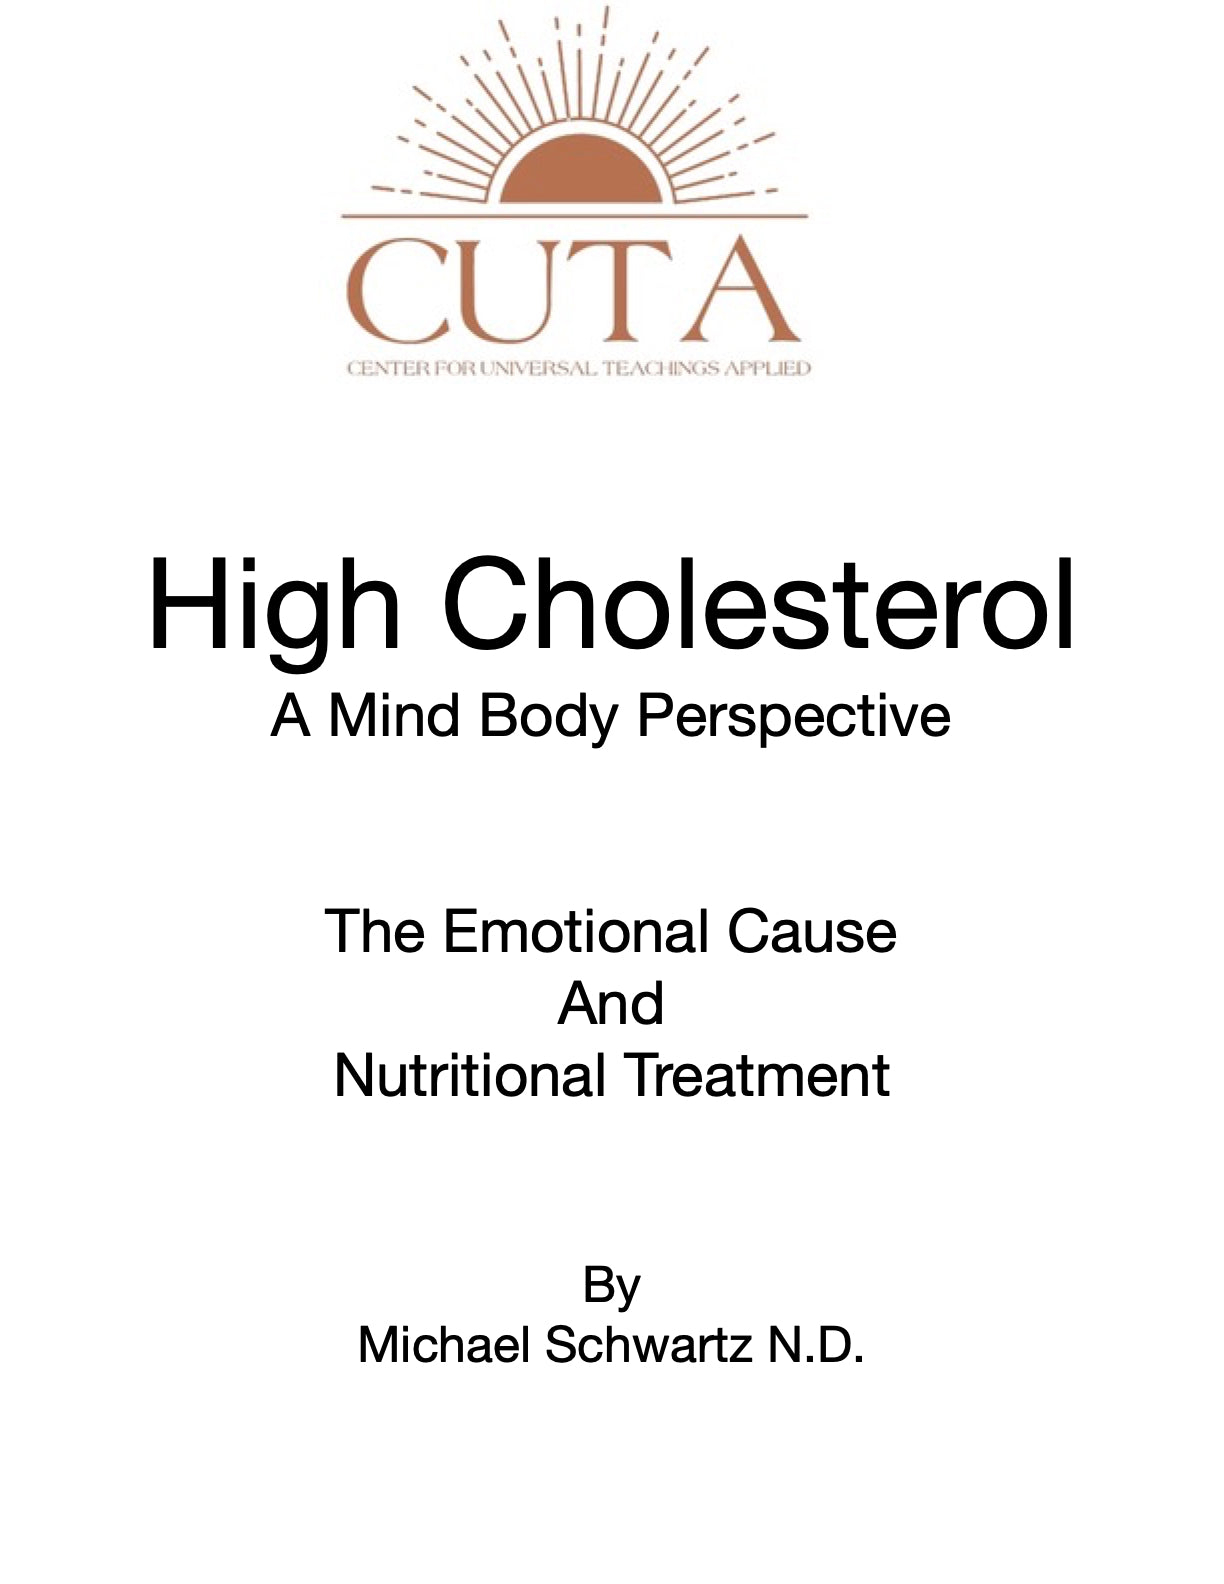 High Cholesterol Booklet